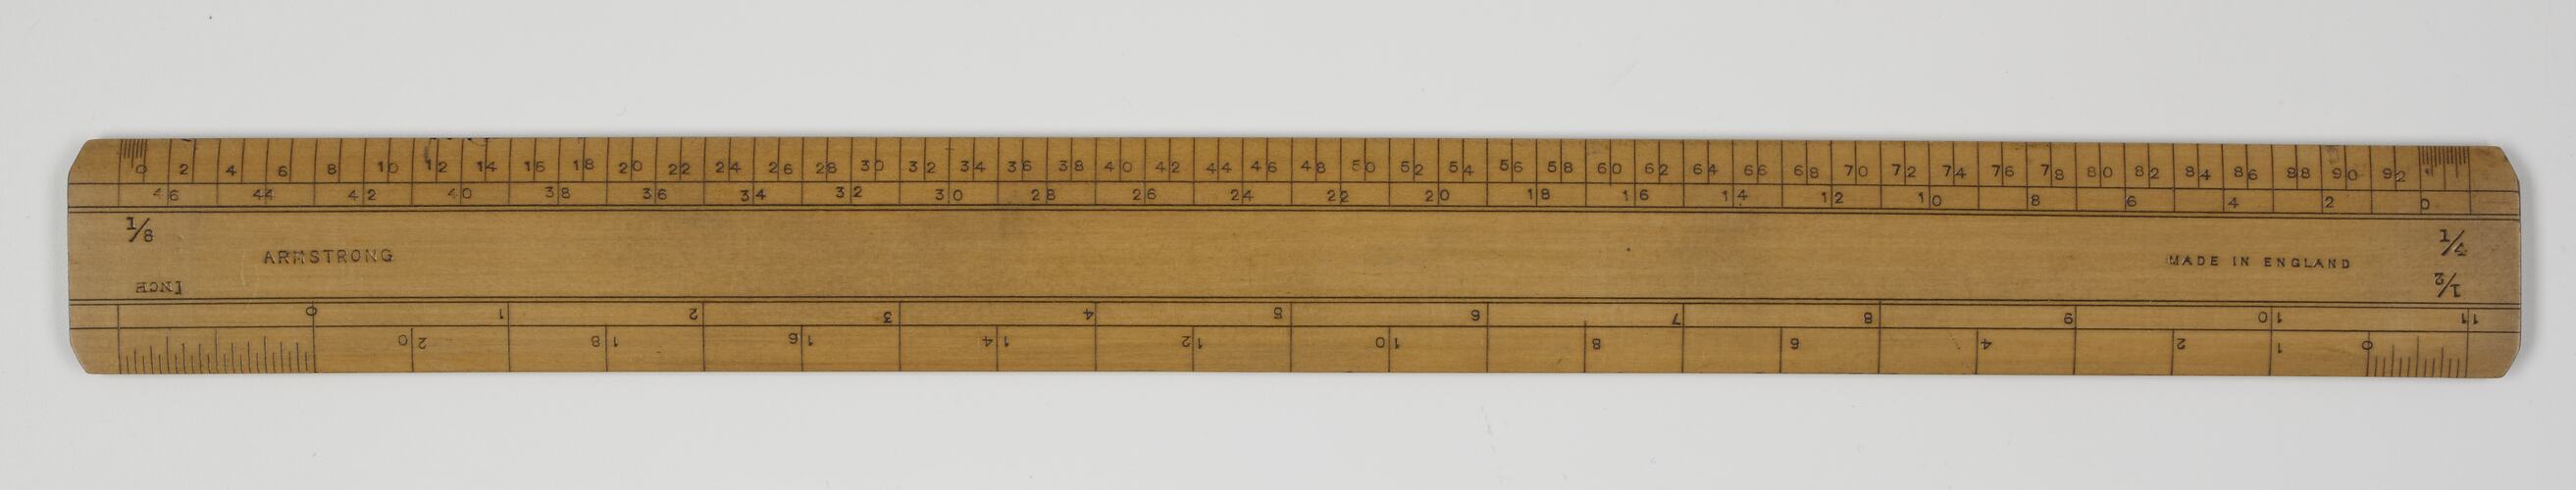 Ruler - Drafting, Wood, England, circa 1930s-1940s